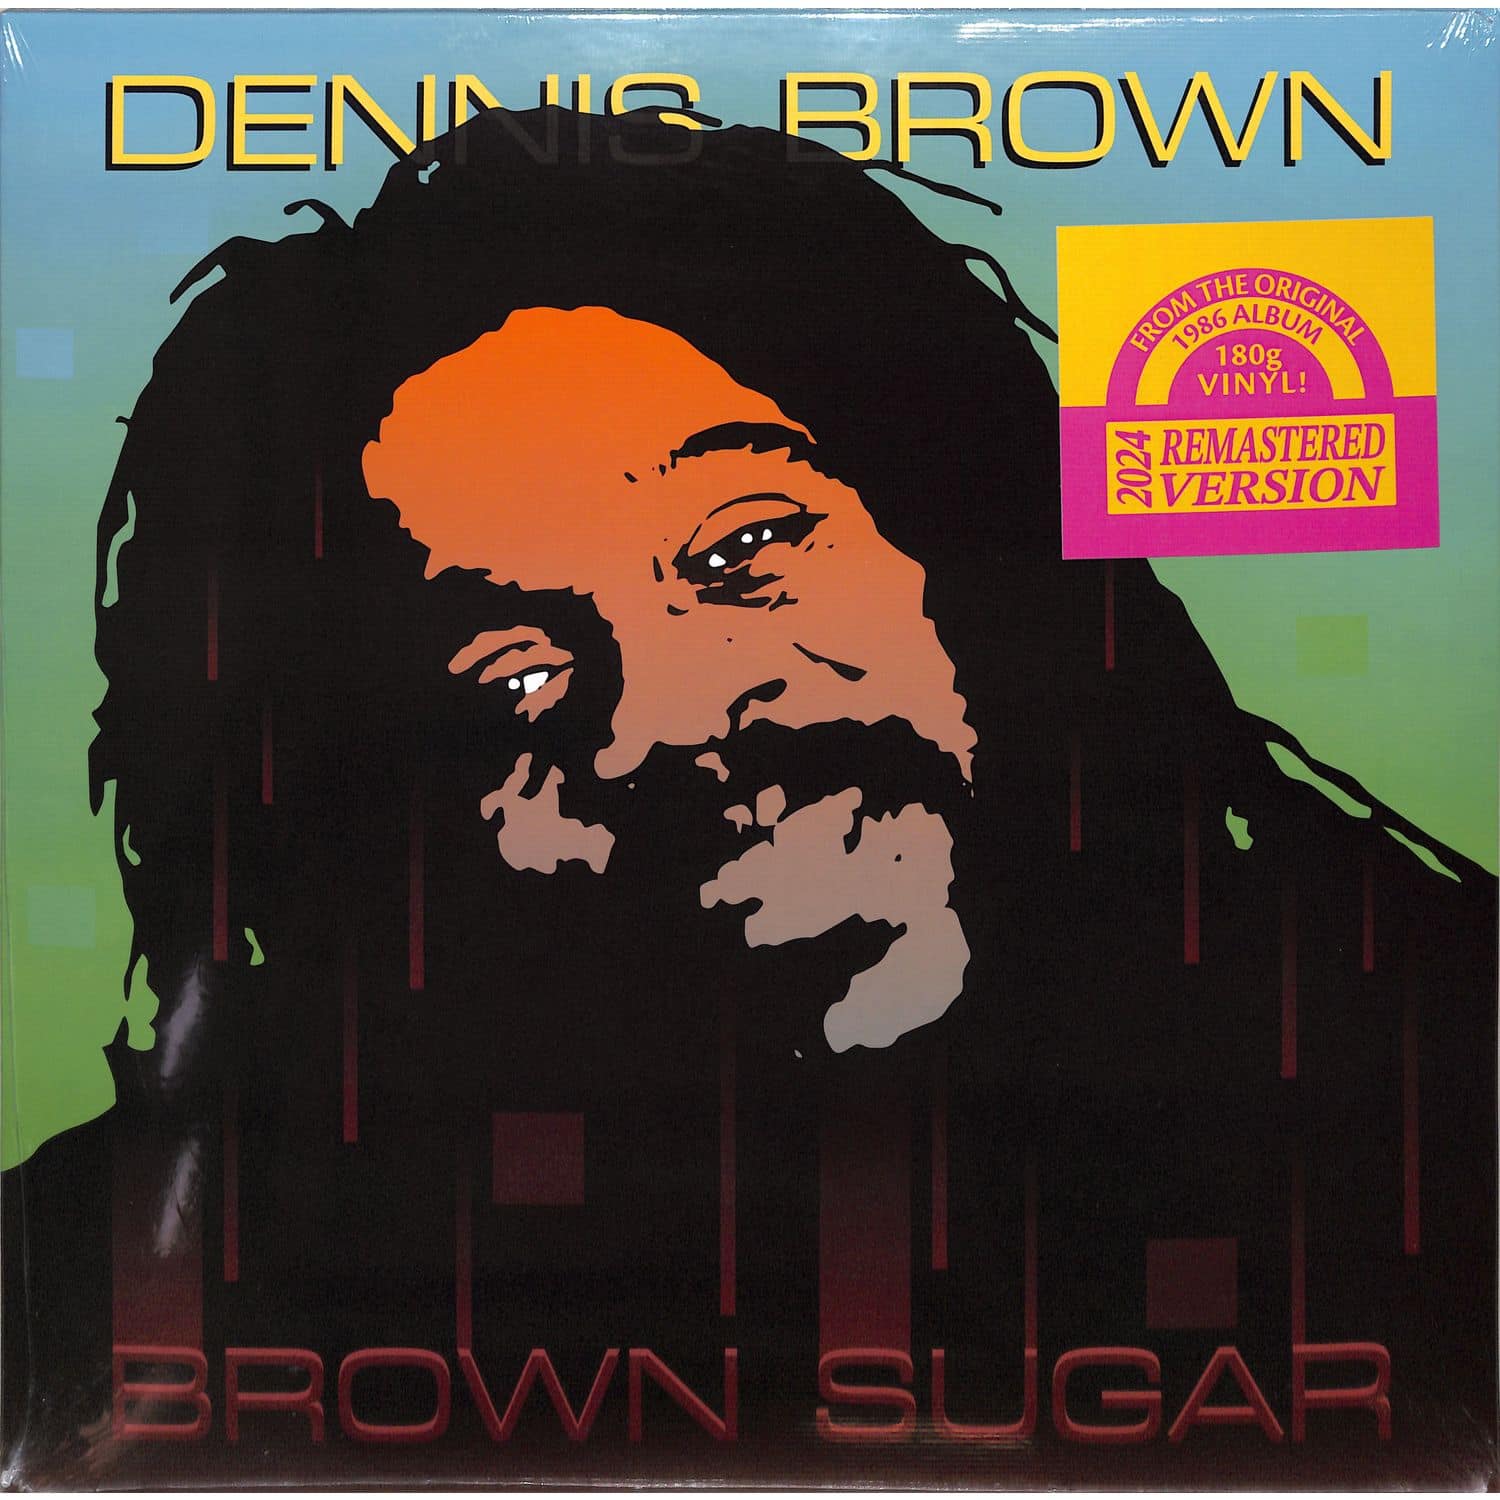 Dennis Brown - BROWN SUGAR 